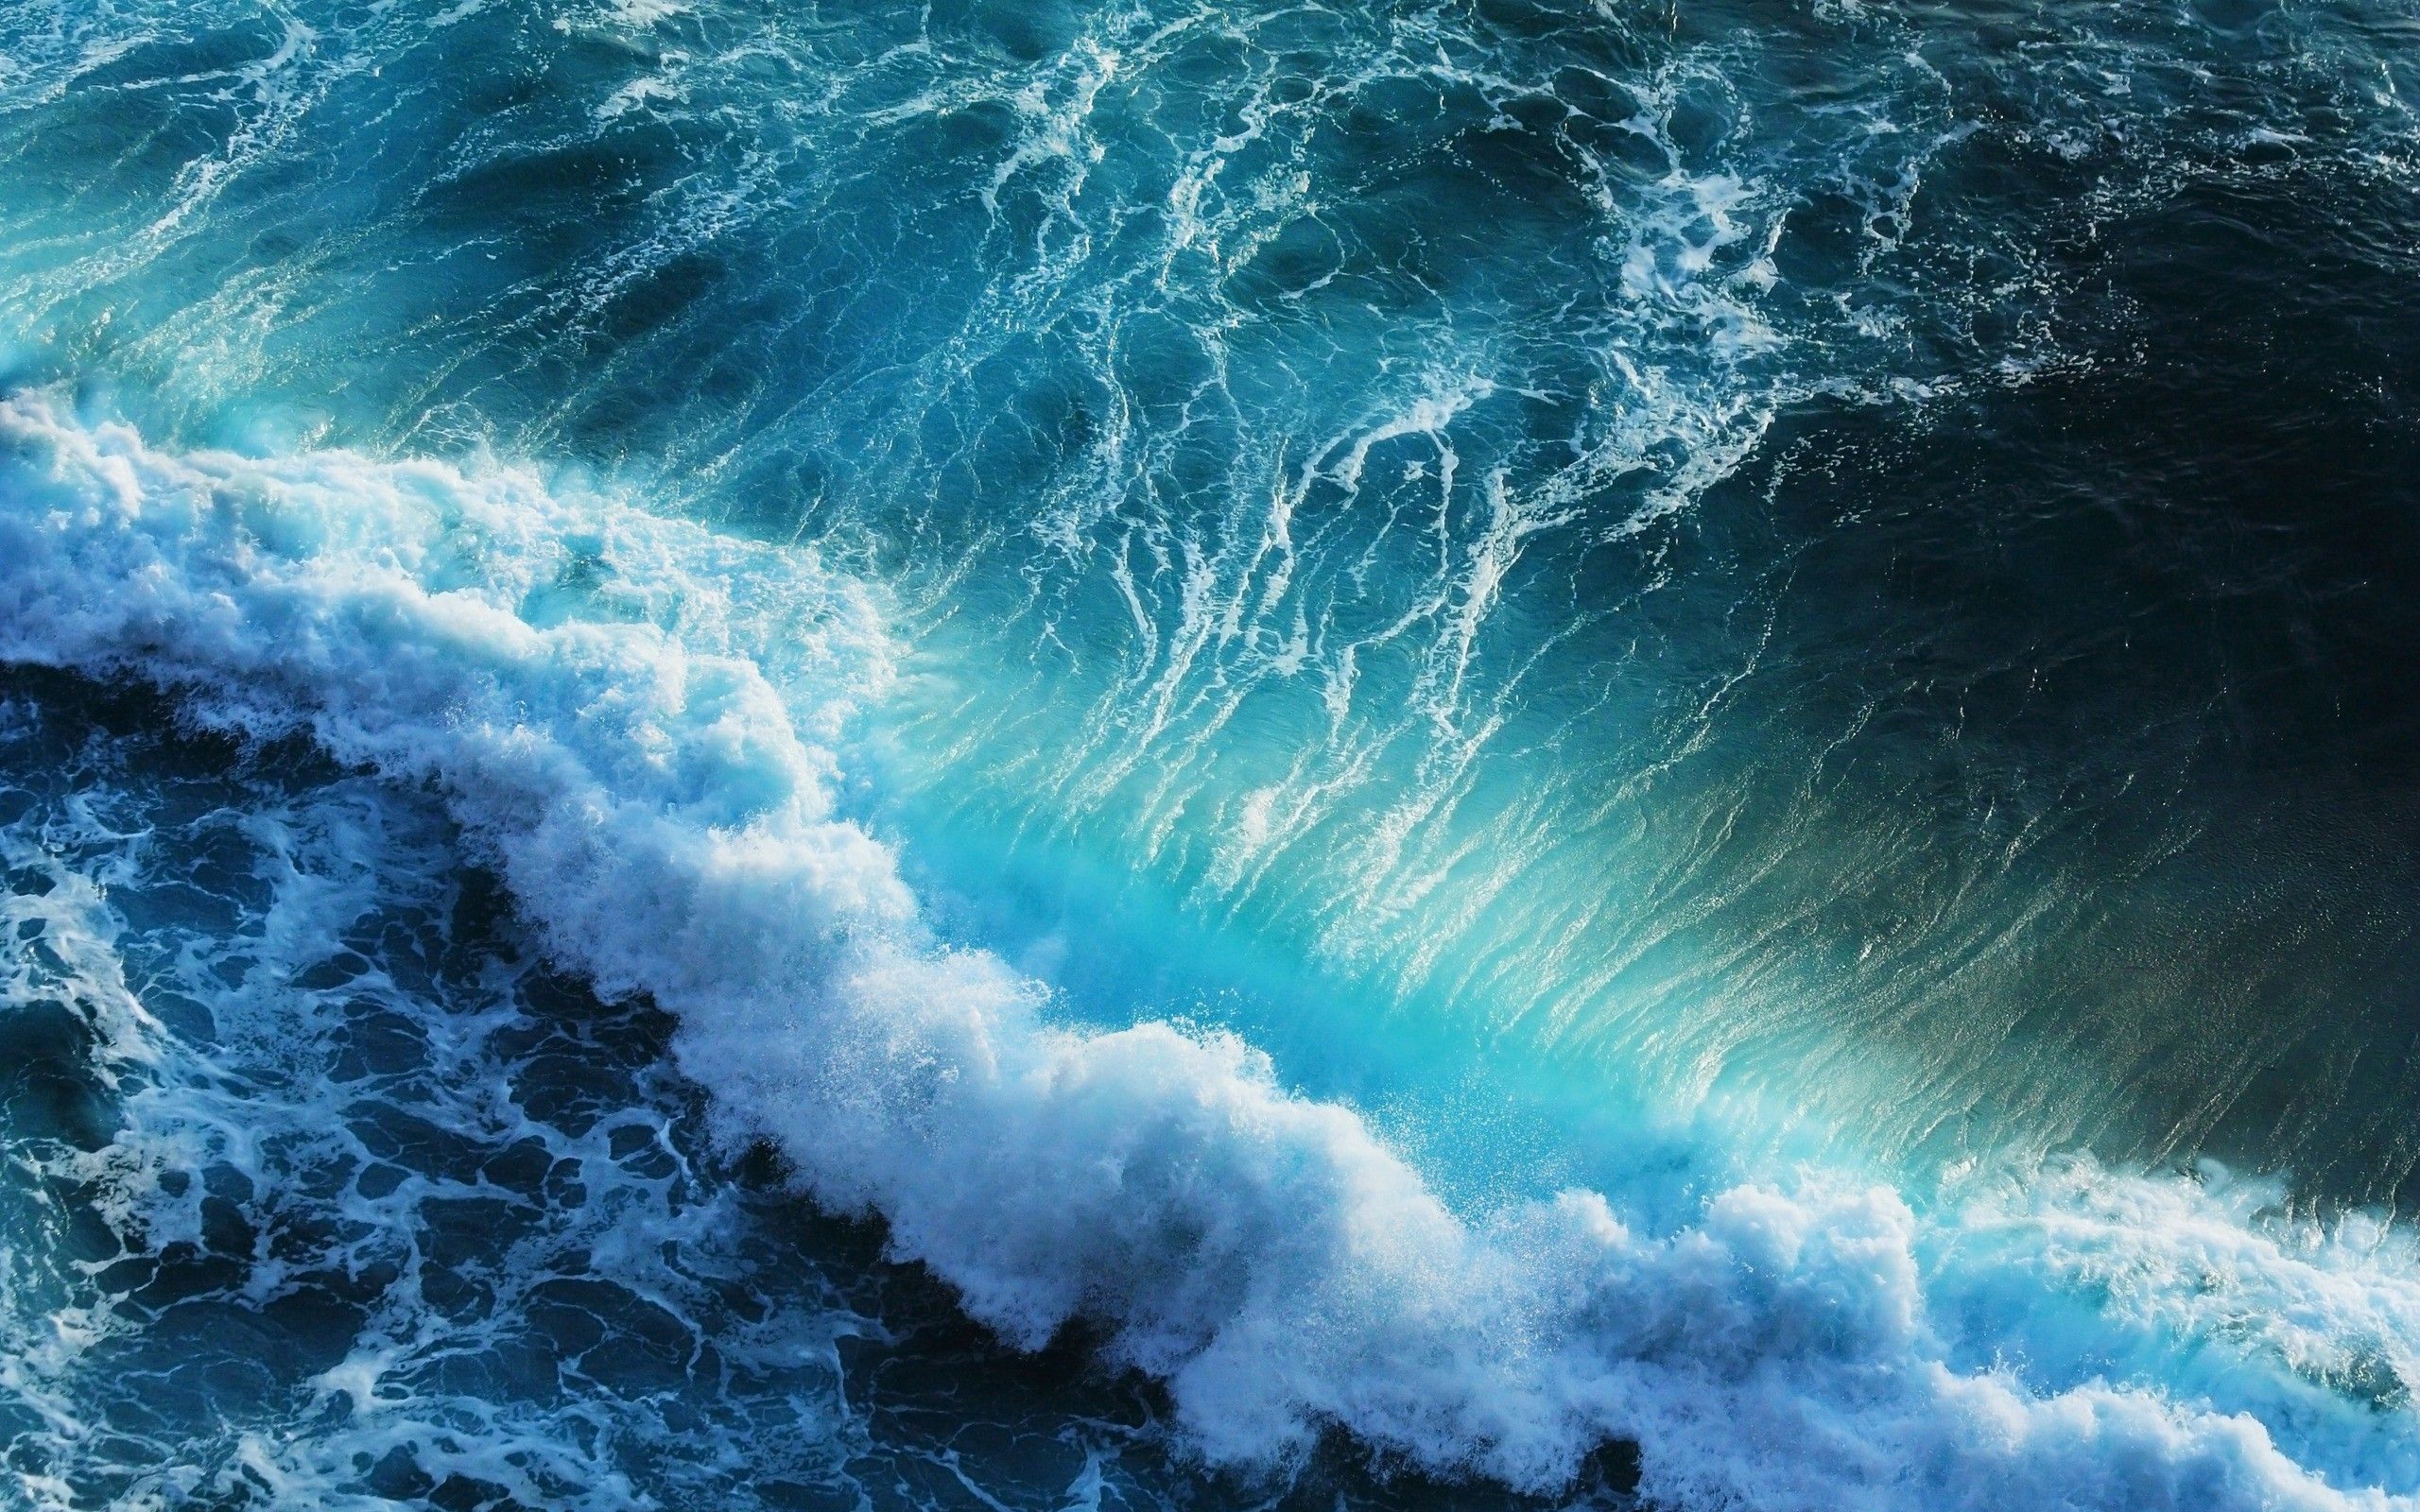 Fondos de pantalla de olas del mar - FondosMil